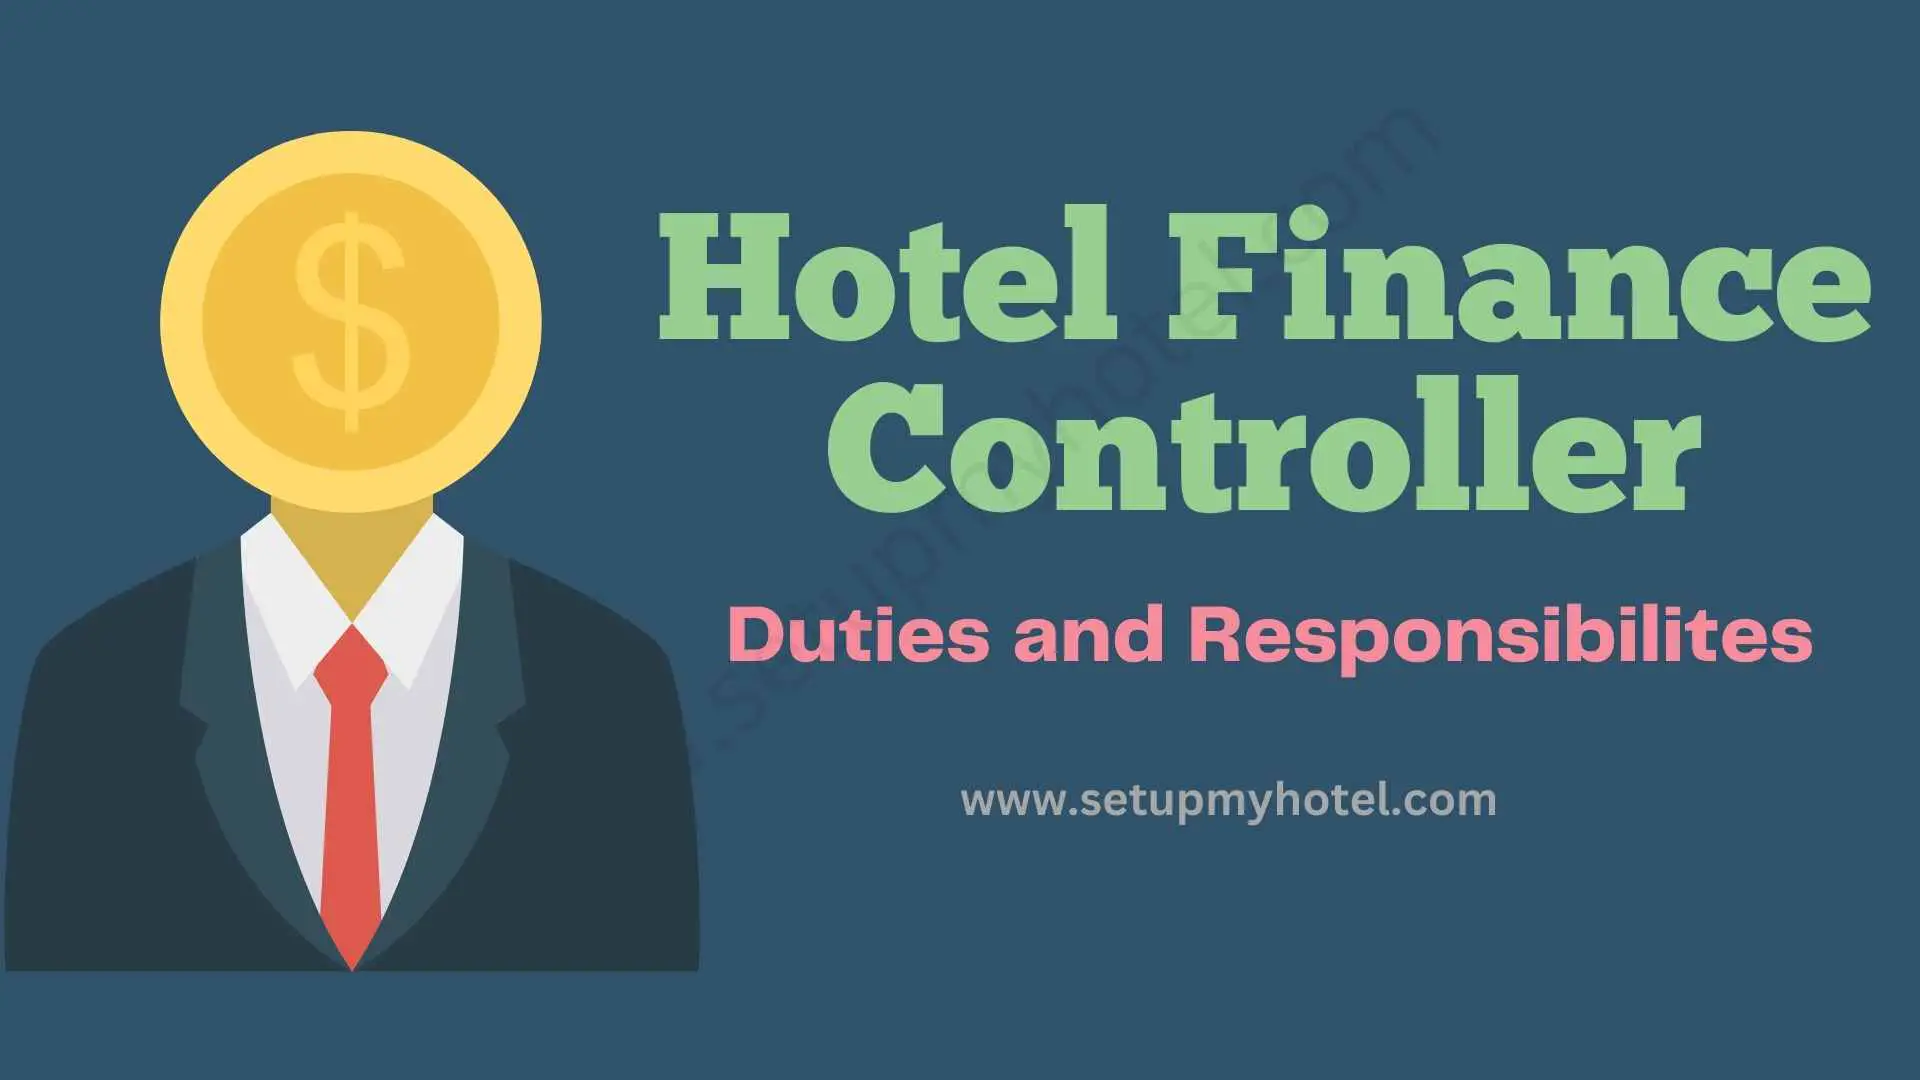 Hotel Finance Controller Duties and Responsibilities